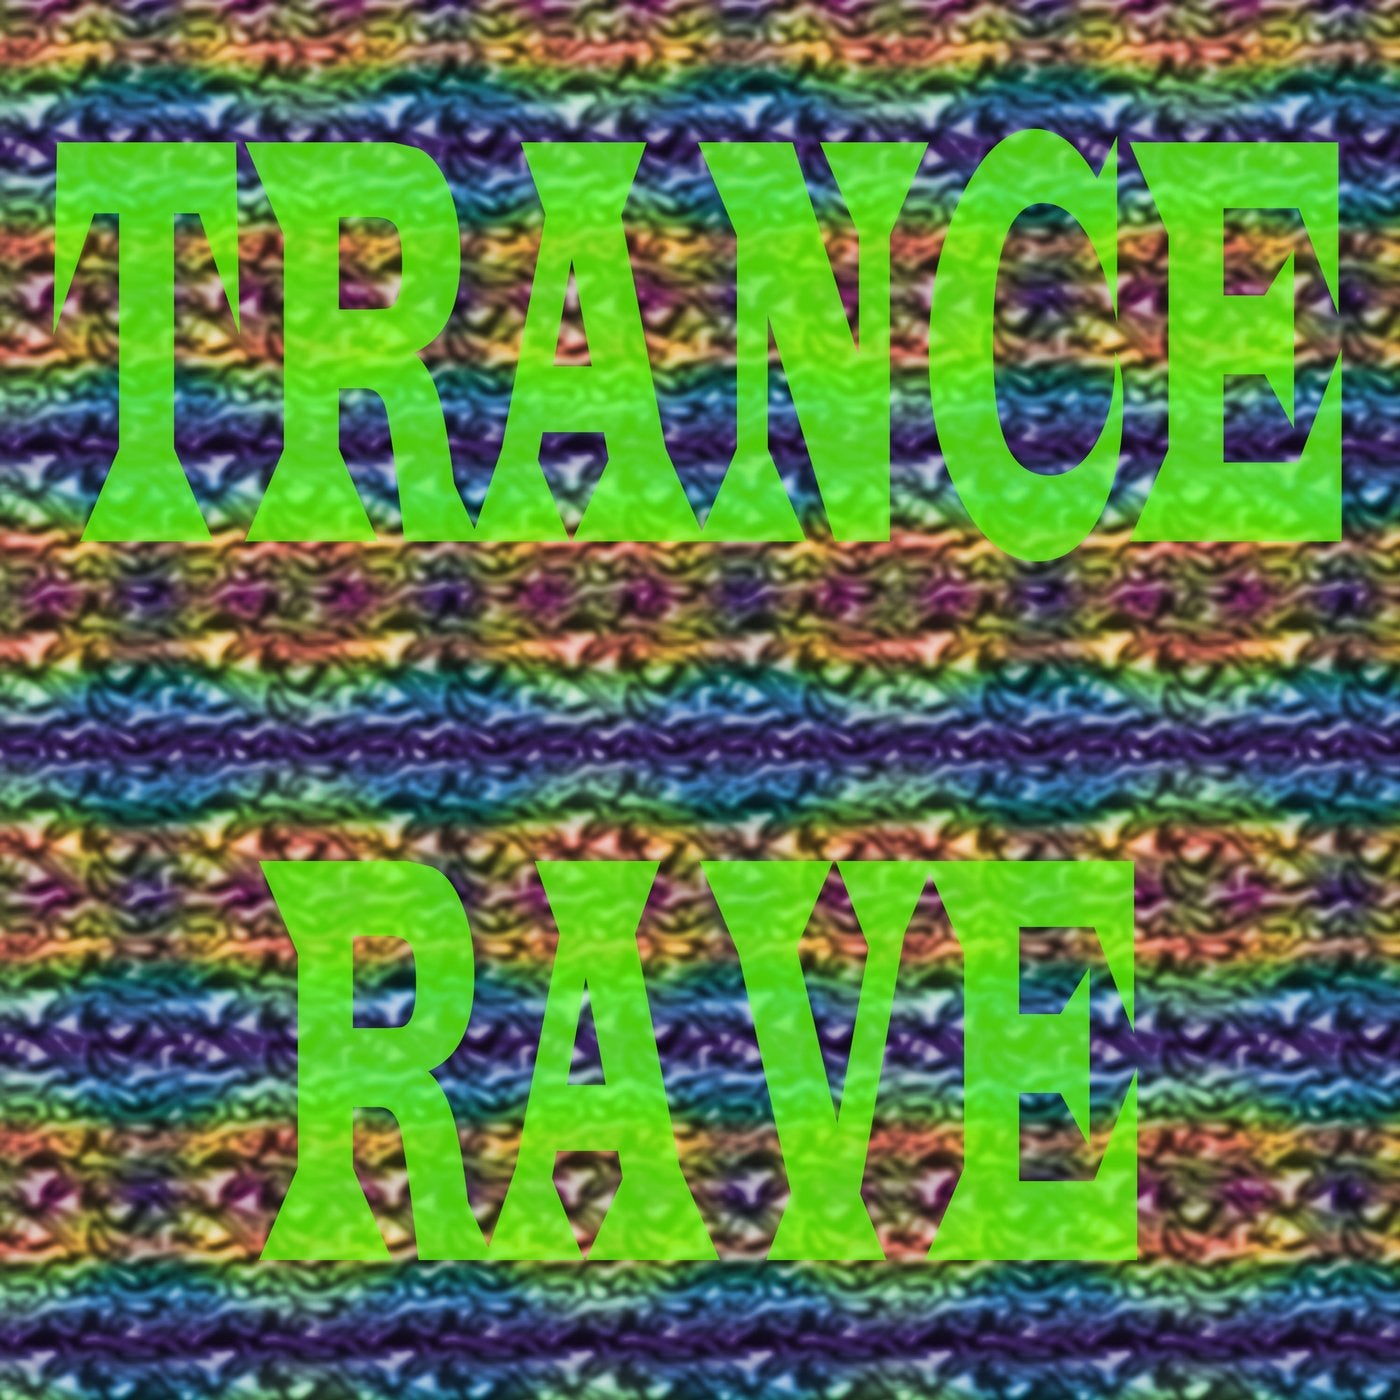 Trance Rave